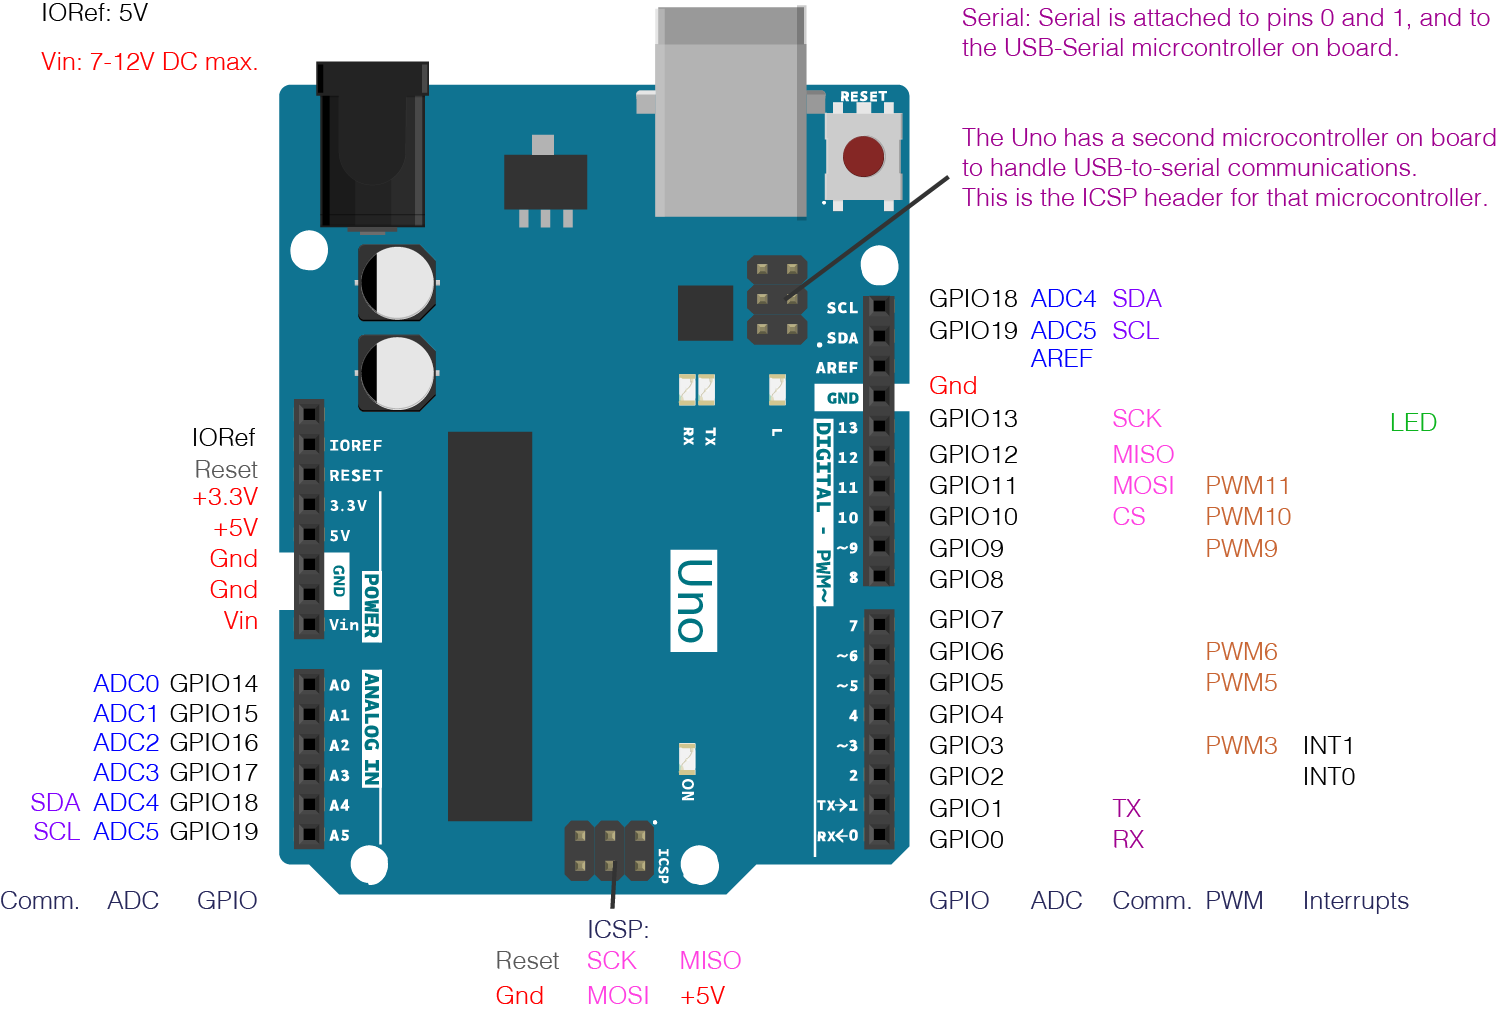 arduino mega pin configuration